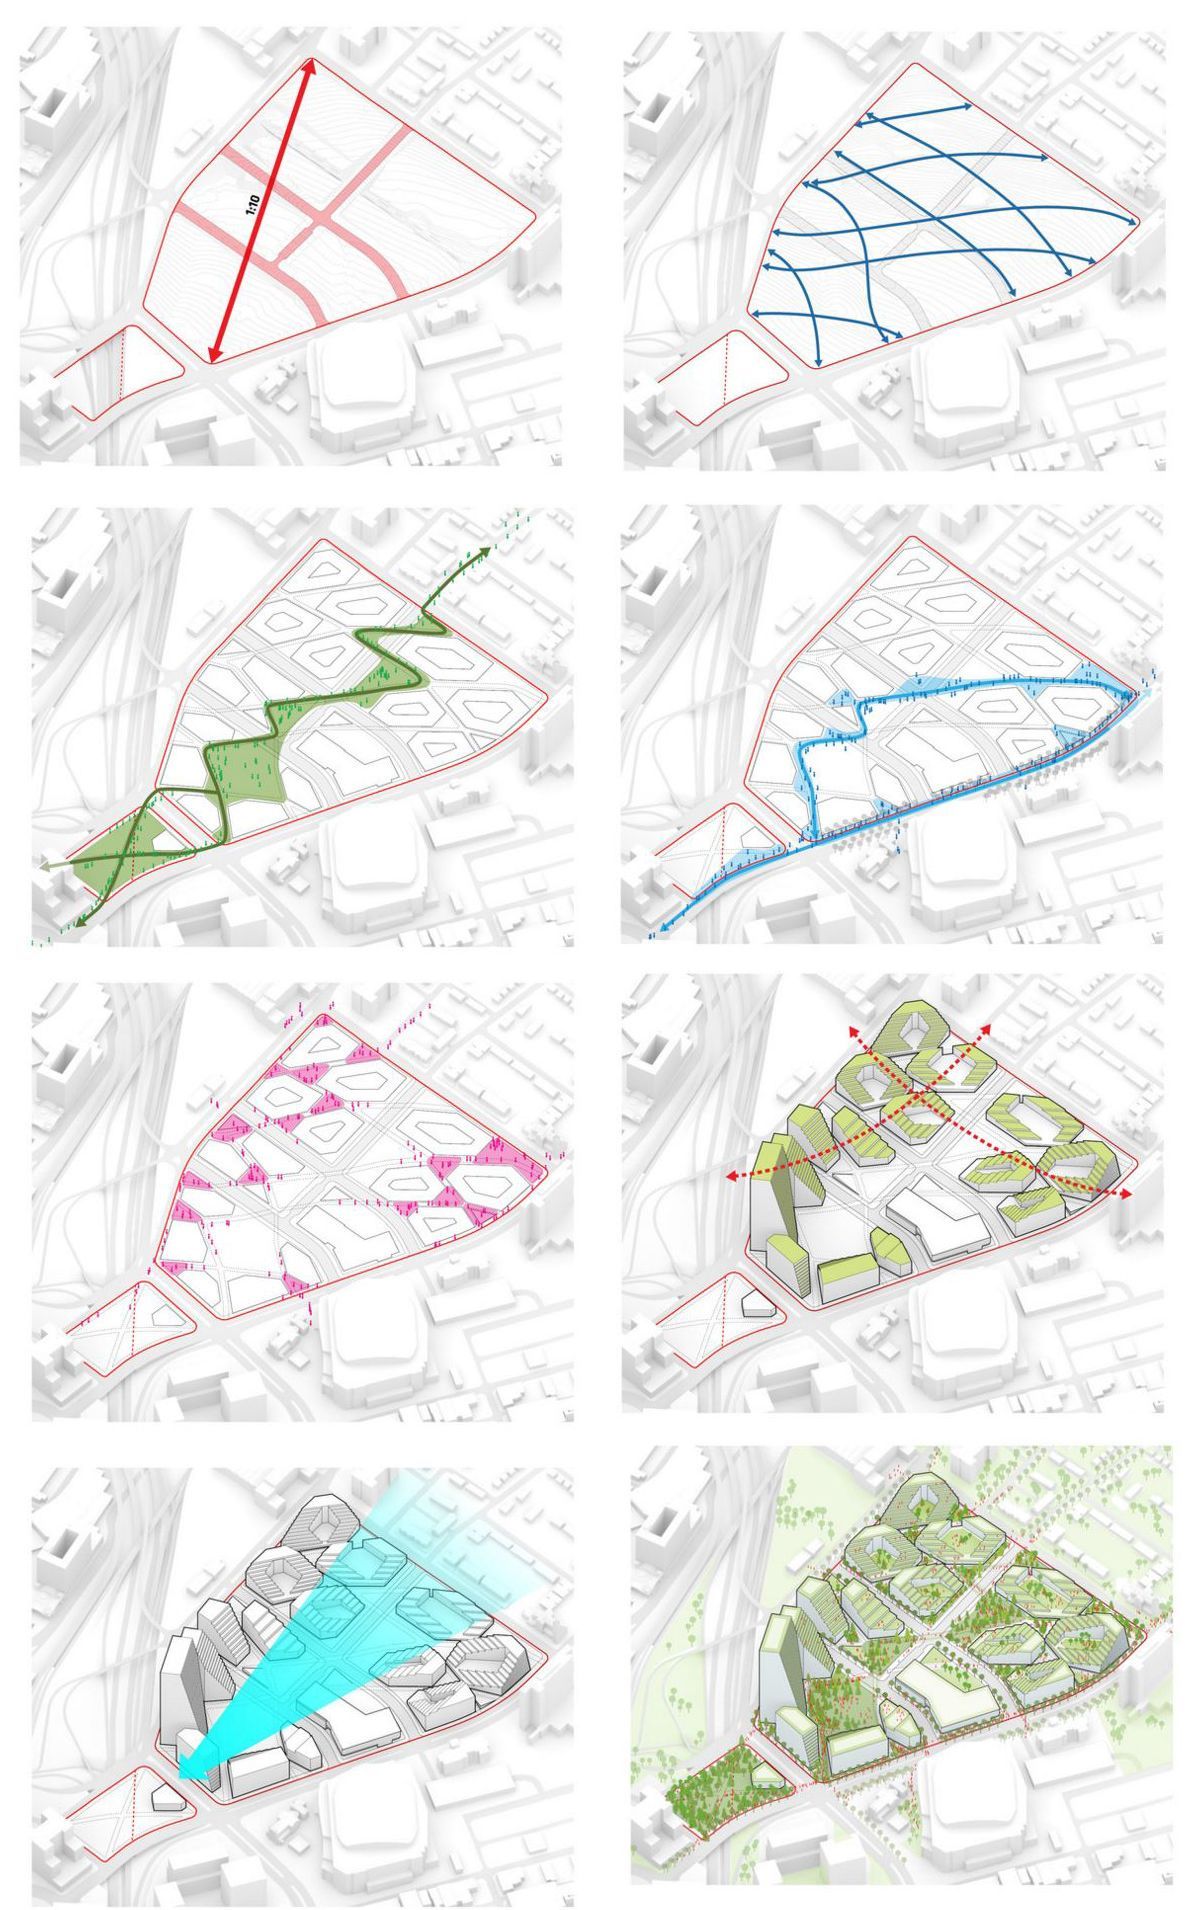 Gallery of New Lower Hill Masterplan / West 8 + BIG + Atelier Ten  - 8 -   16 urban planting design ideas